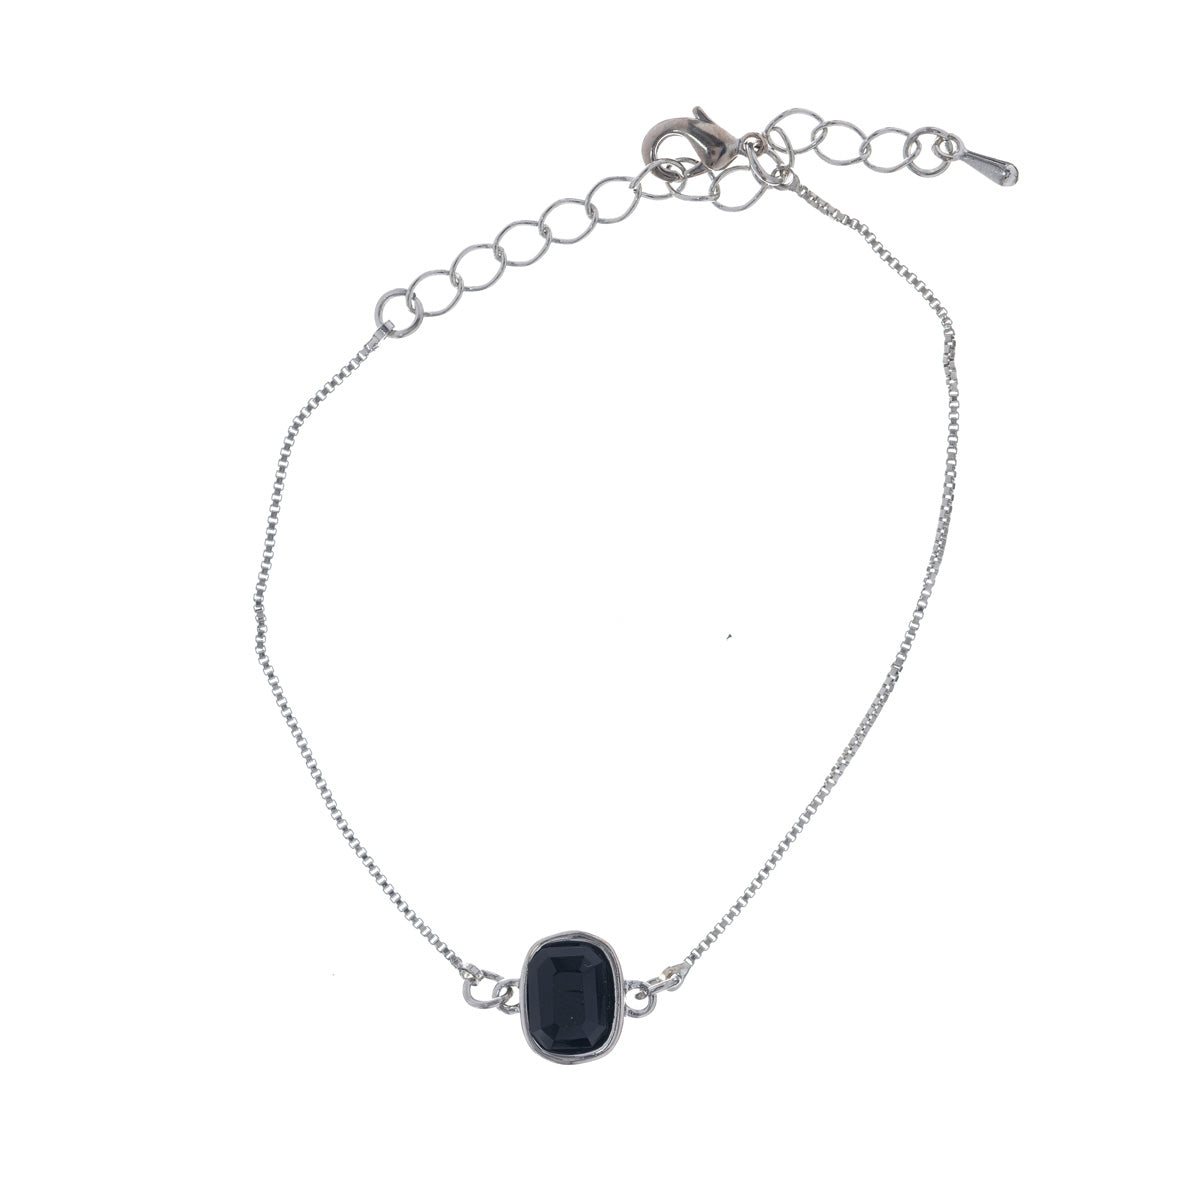 A bracelet with a glass stone